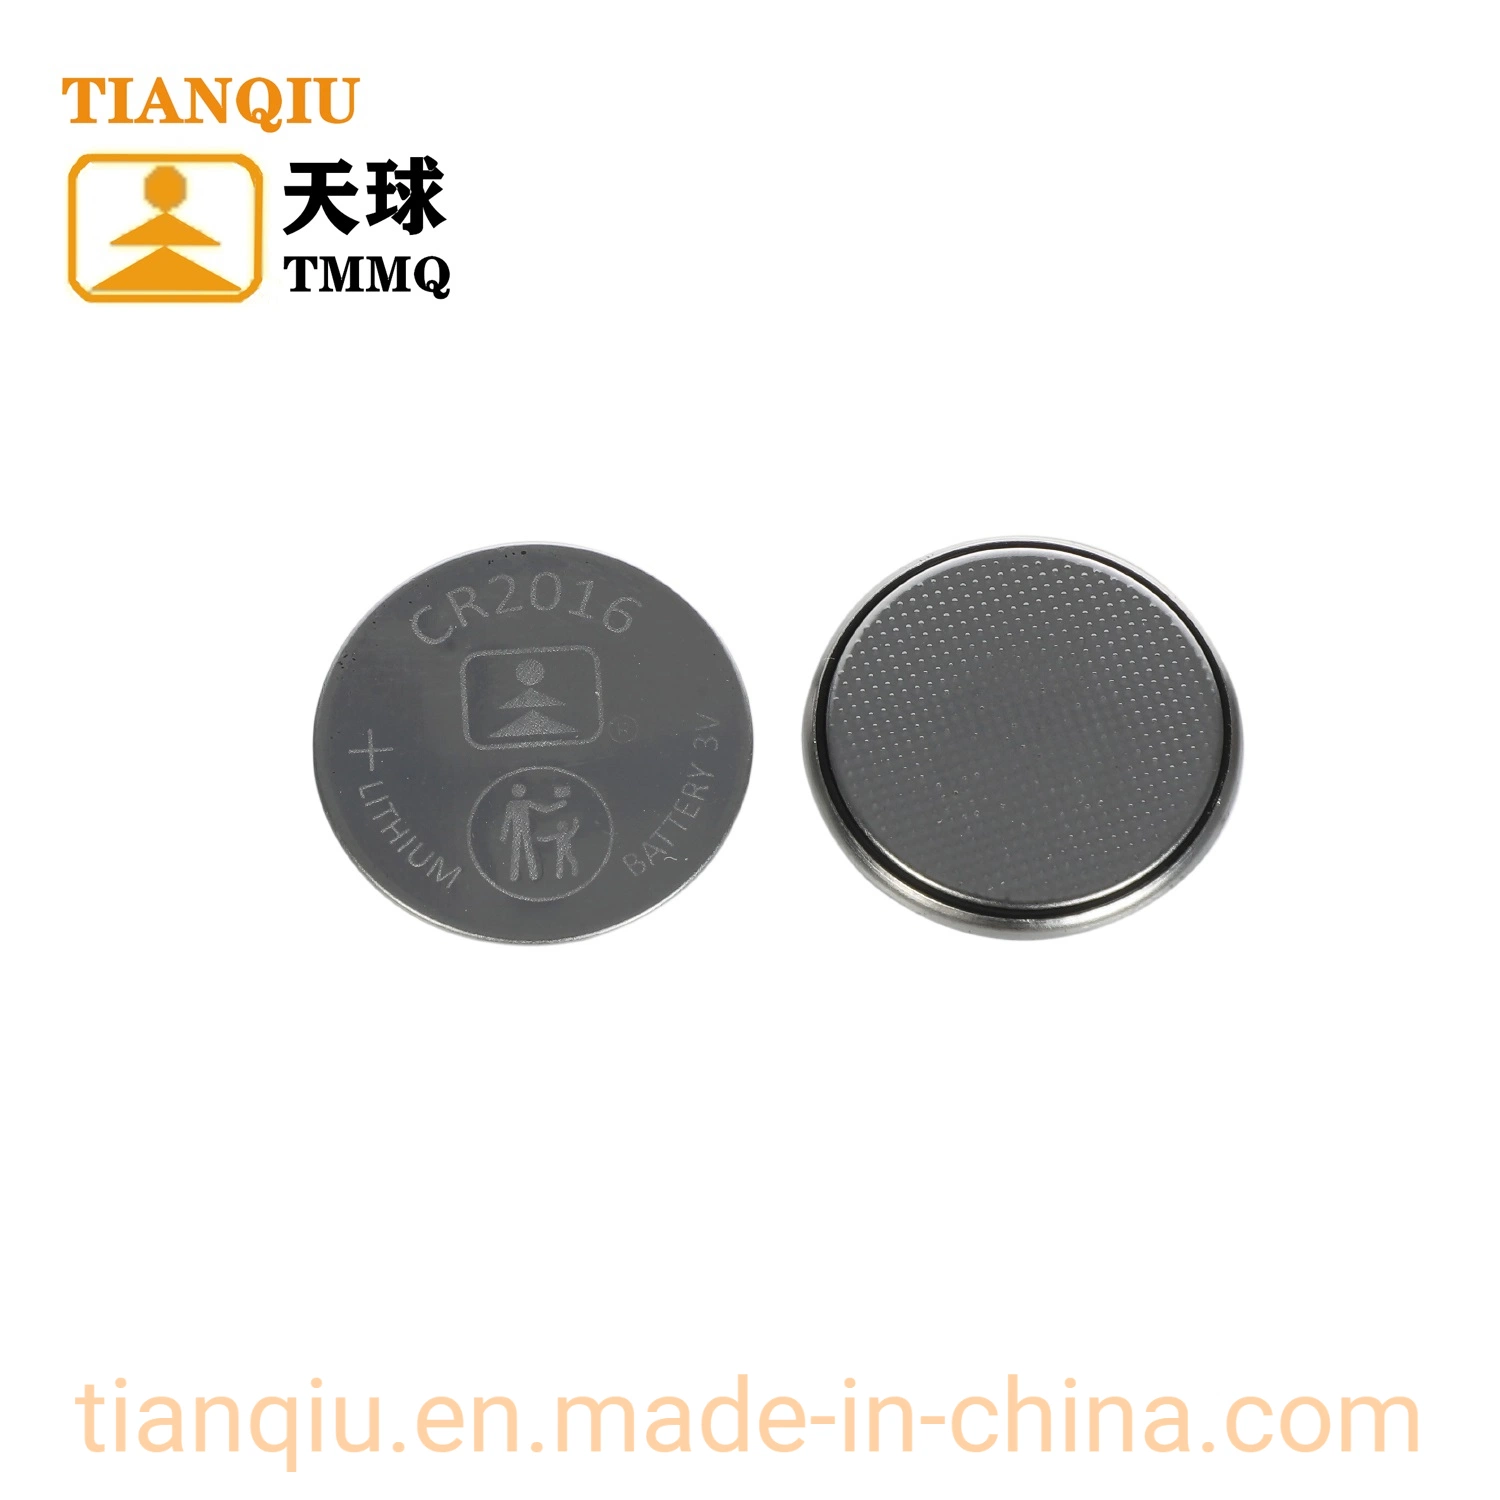 Tianqiu Cr2016 Button Cell Battery 3V Lithium Dry Battery Factory Reloj Pilas